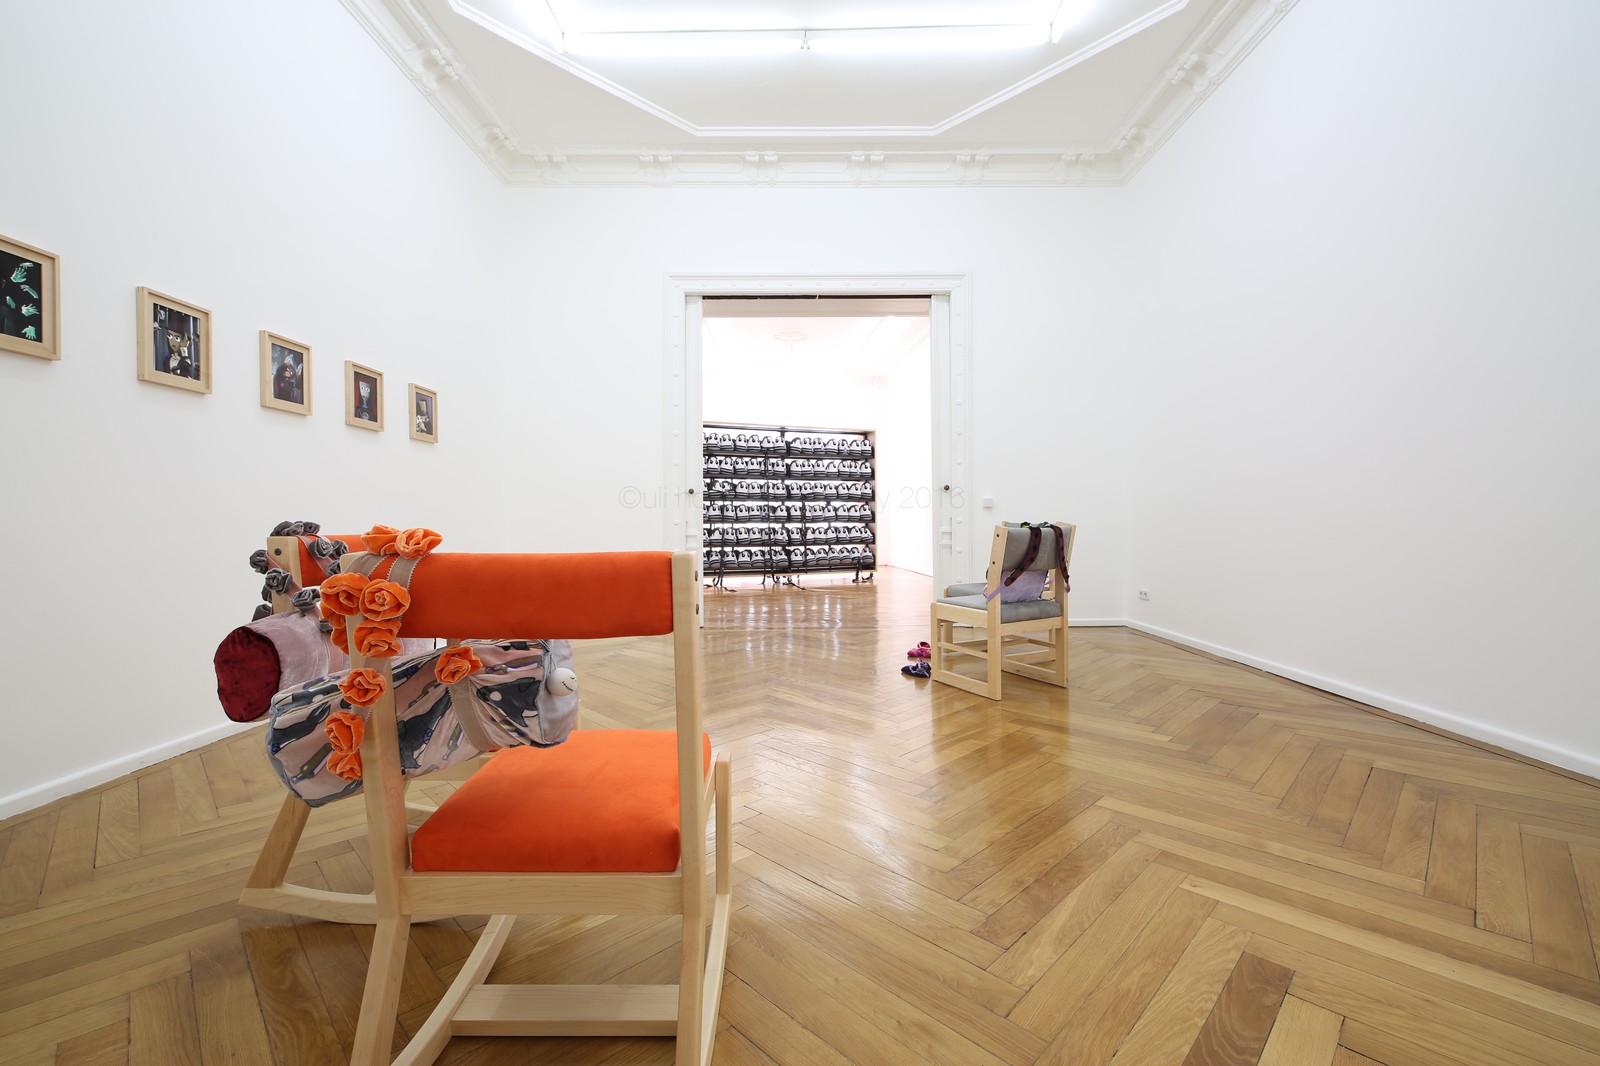 Installation view, Columbine Library, Société, Berlin, 2014